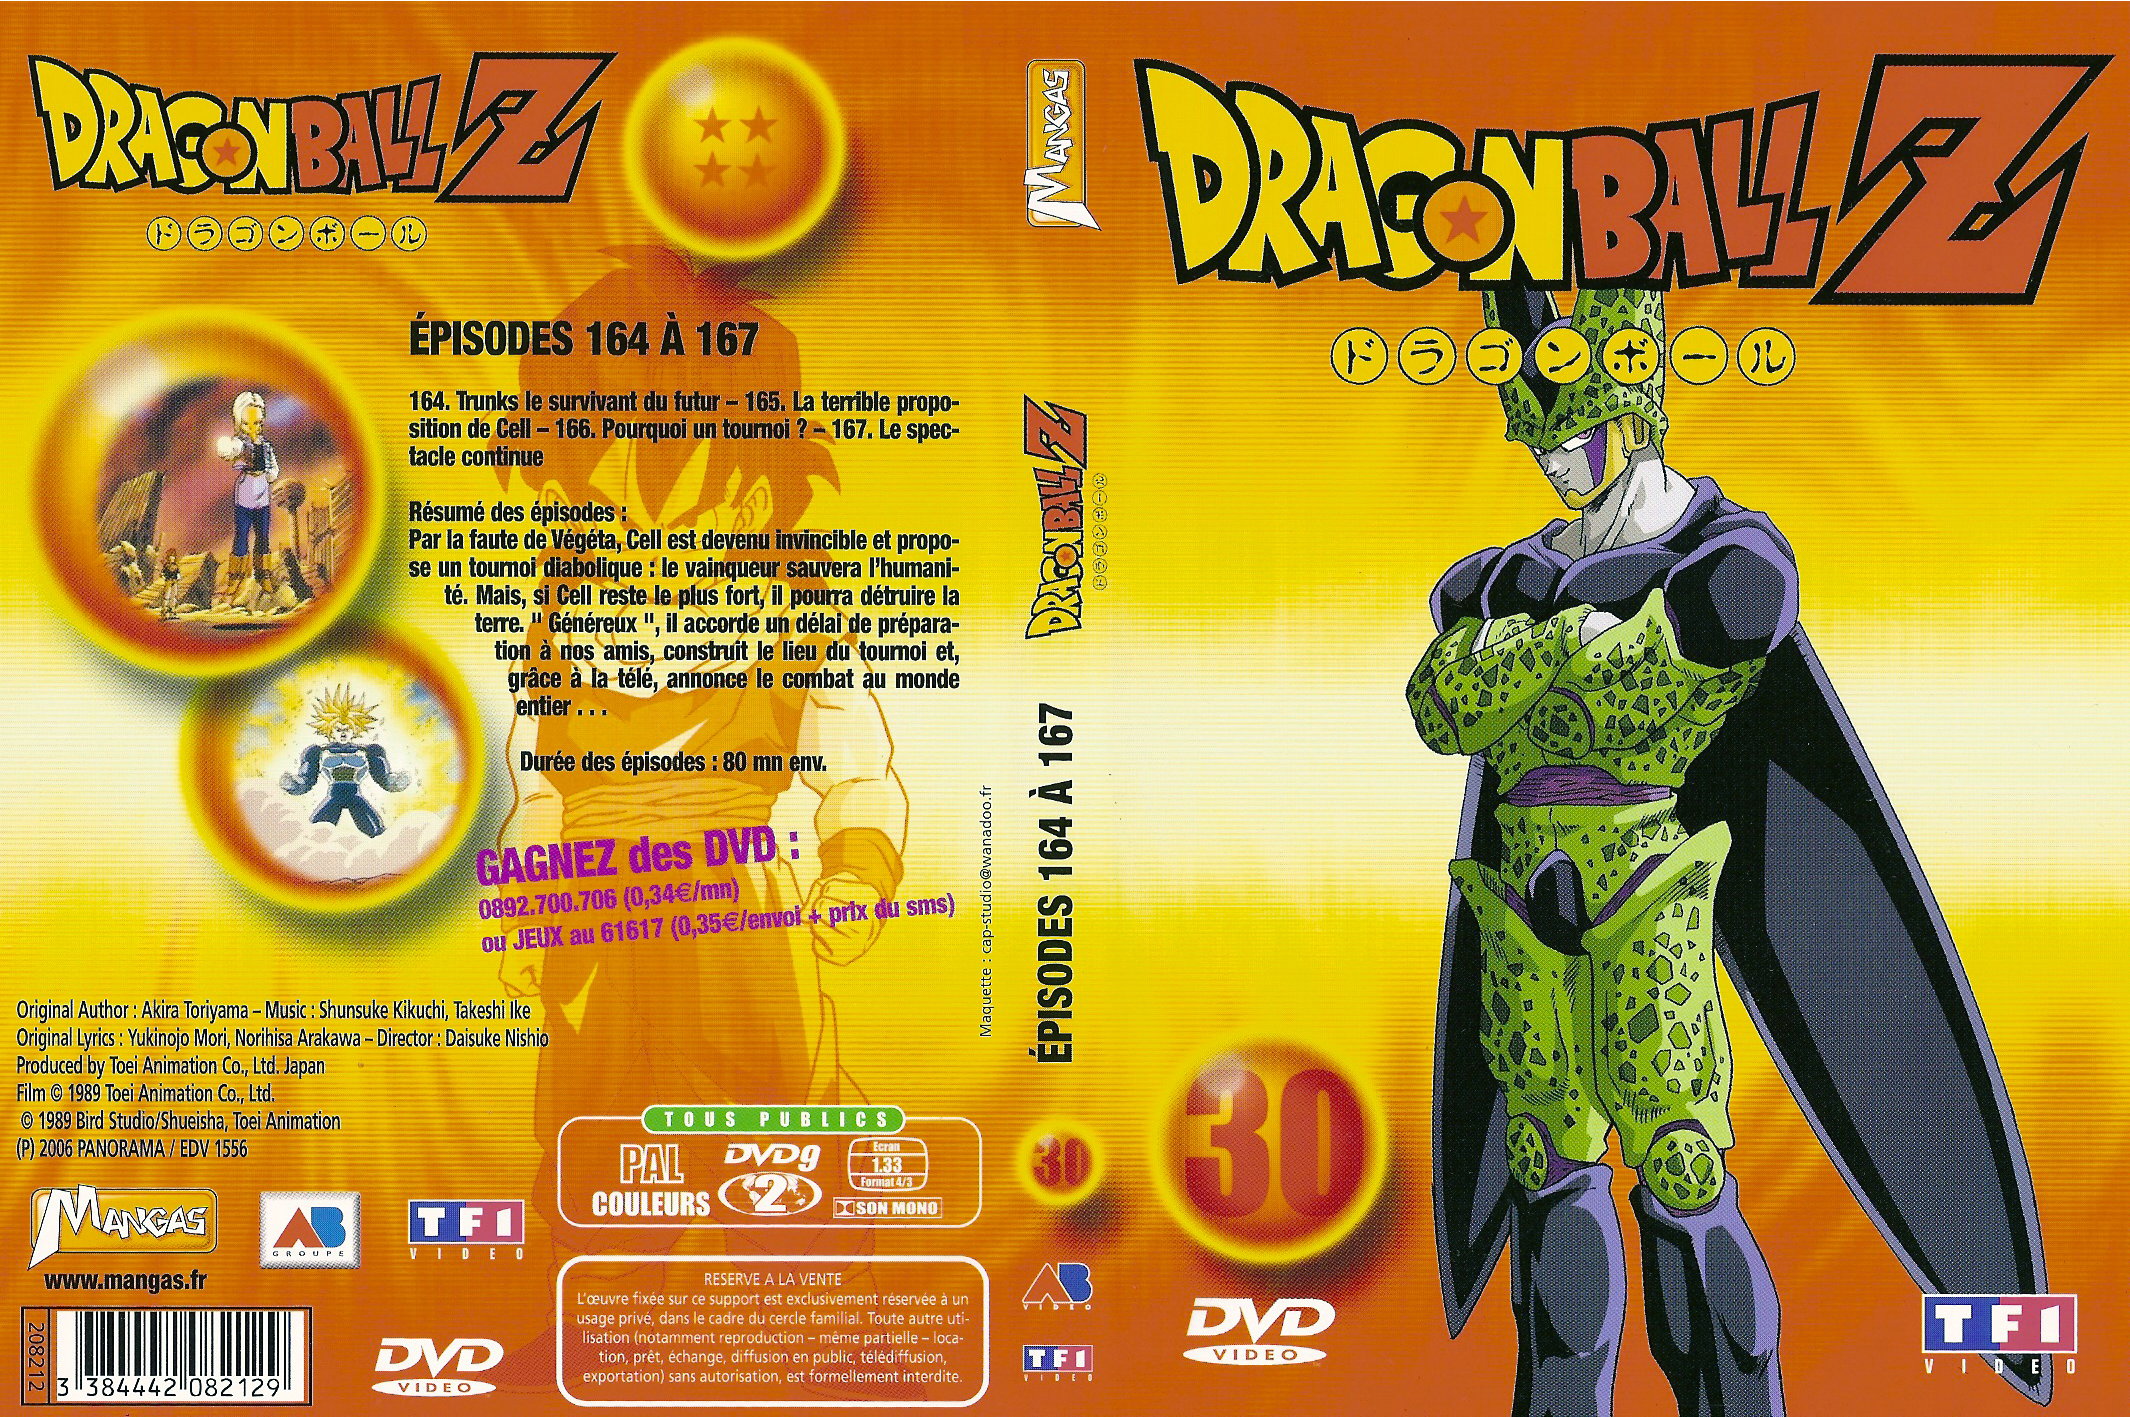 Jaquette DVD Dragon Ball Z Vol 30